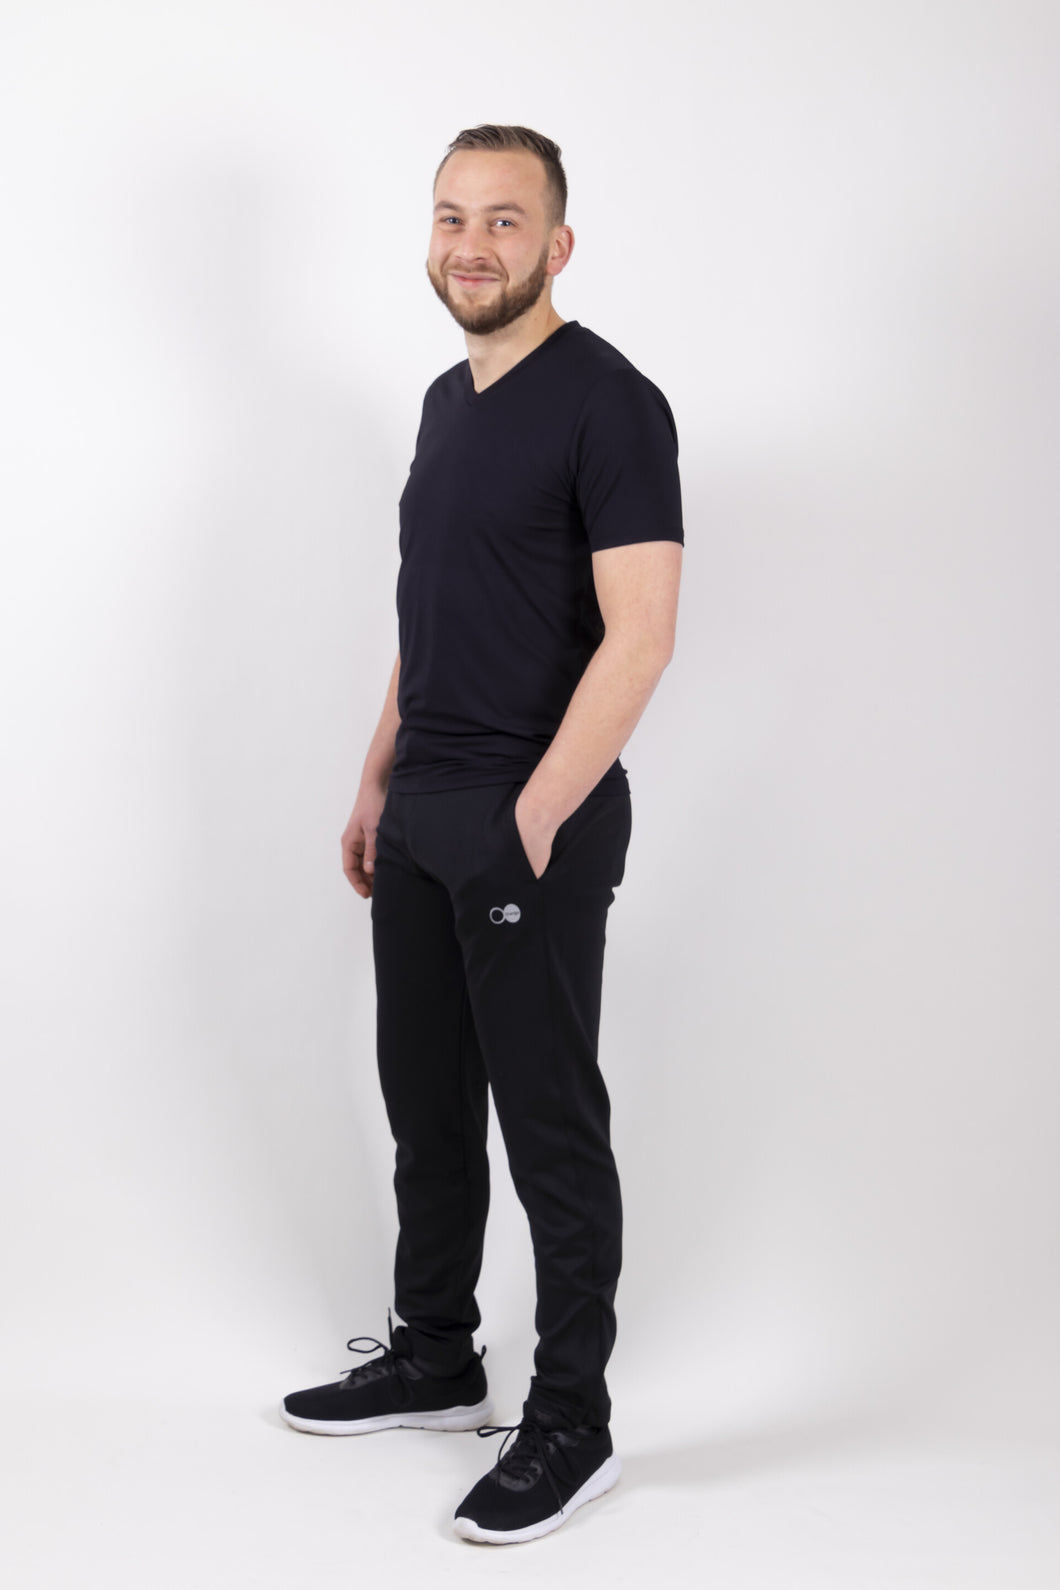 Orango Running - Mens Basic T-shirt short sleeve V-neck, Regular Fit - Black - P010-102